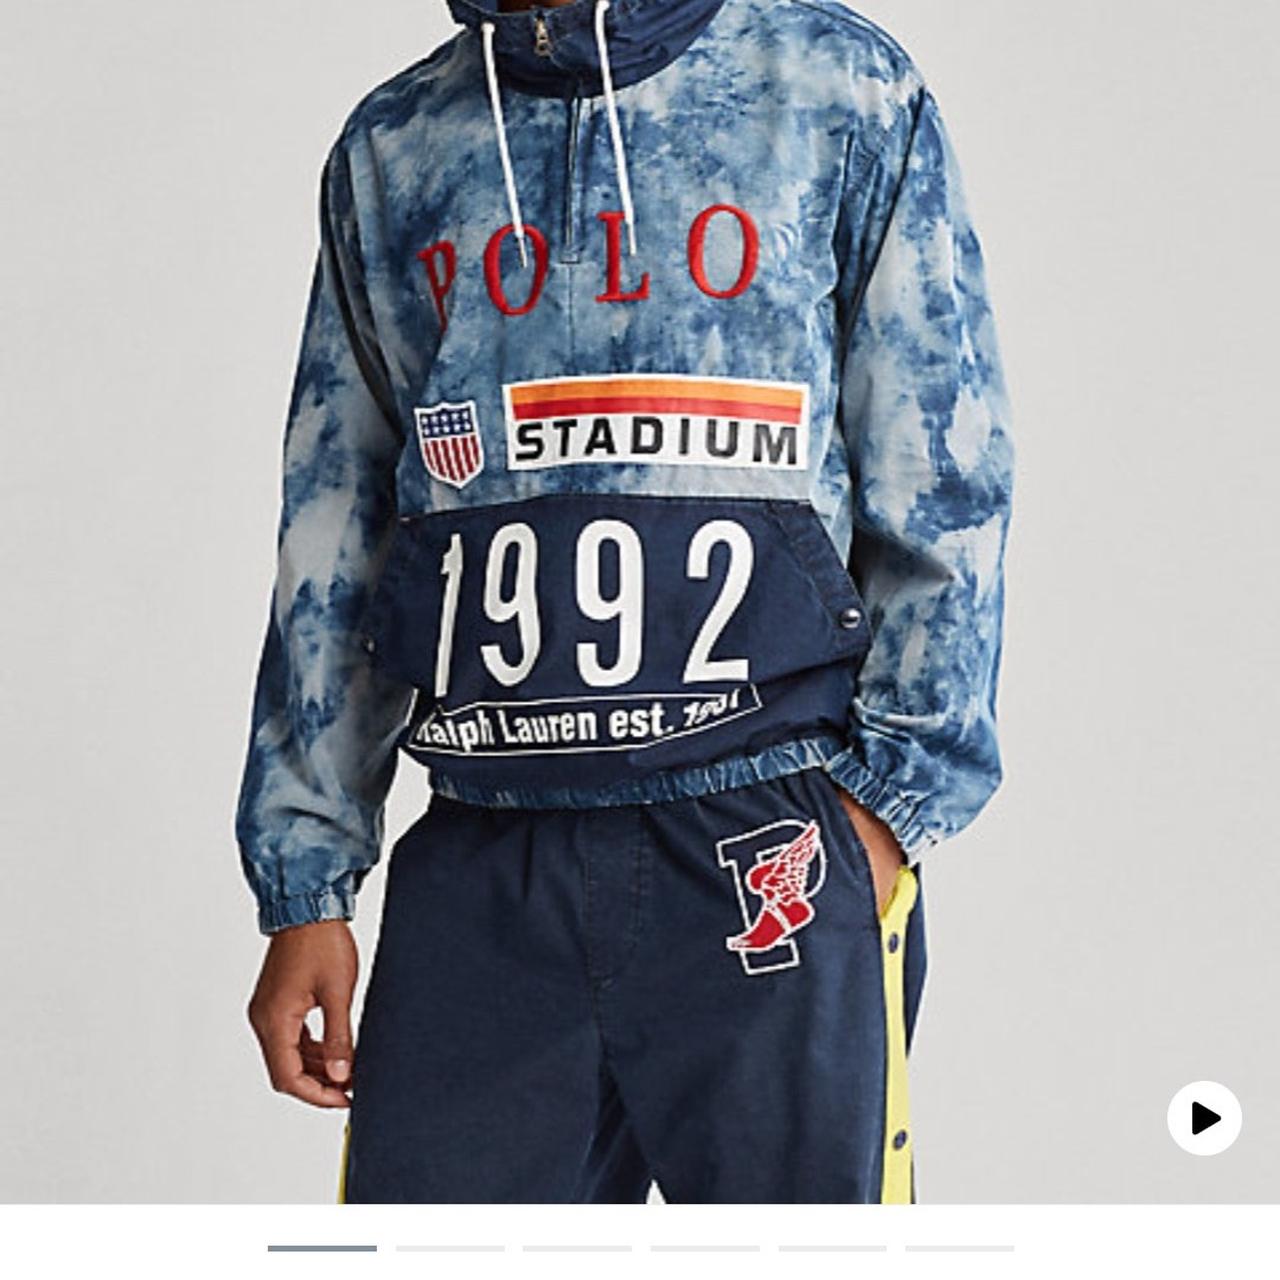 Polo Ralph Lauren Indigo Stadium Popover Jacket